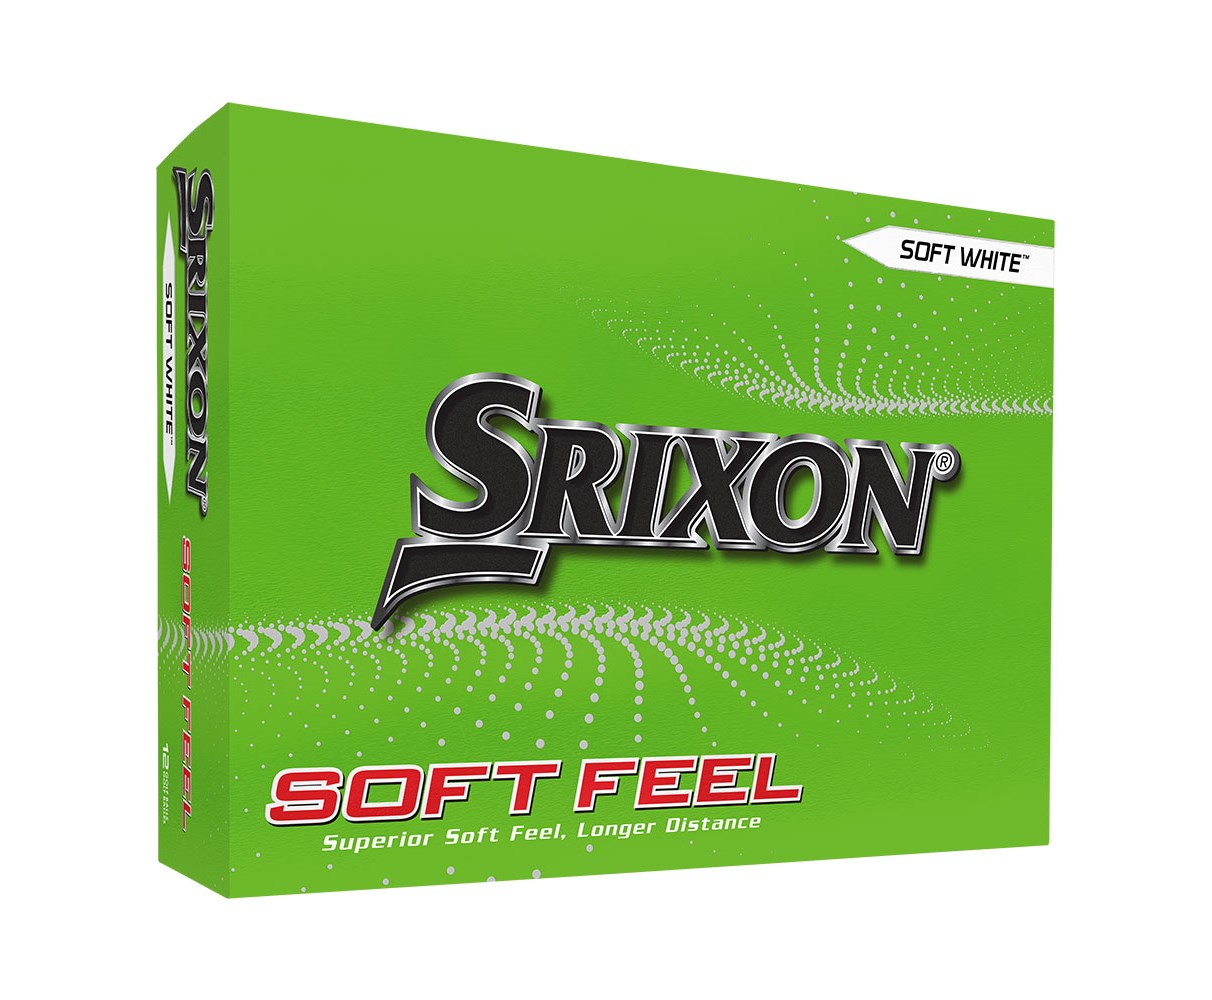 Srixon Soft Feel boltar